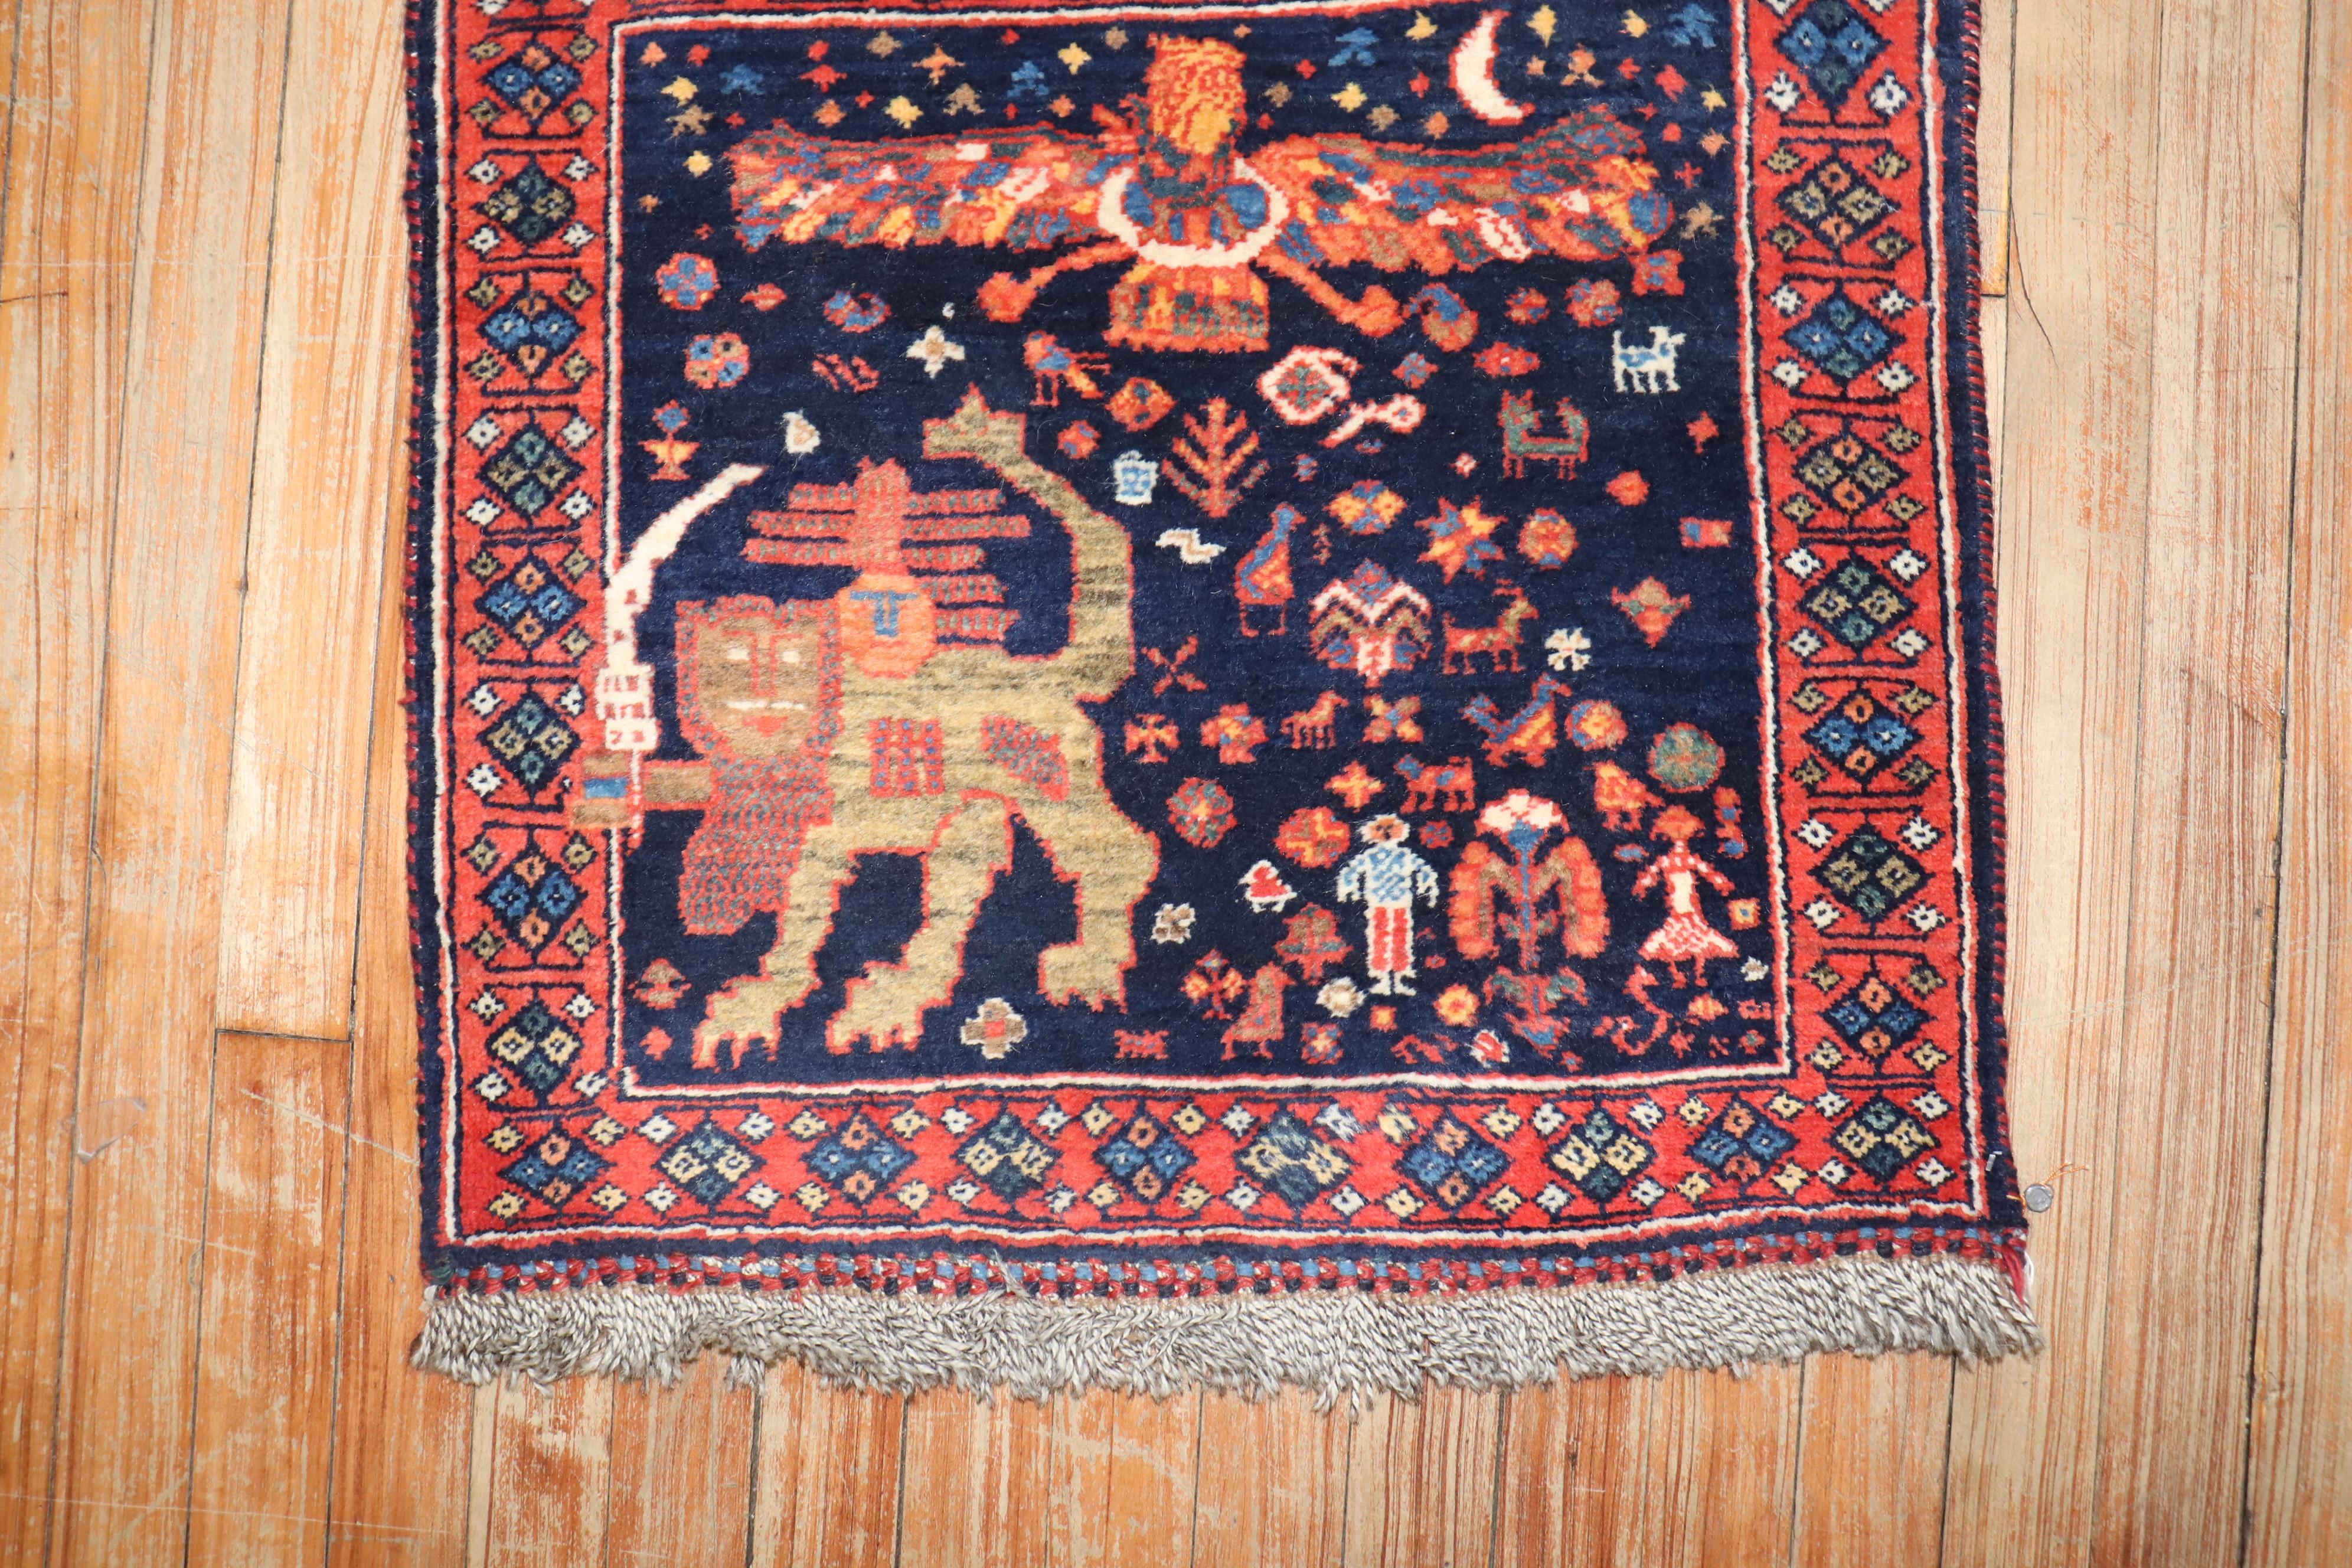 an early 20th century Persian Shiraz Pictorial small bagface rug

2' x 2'5''